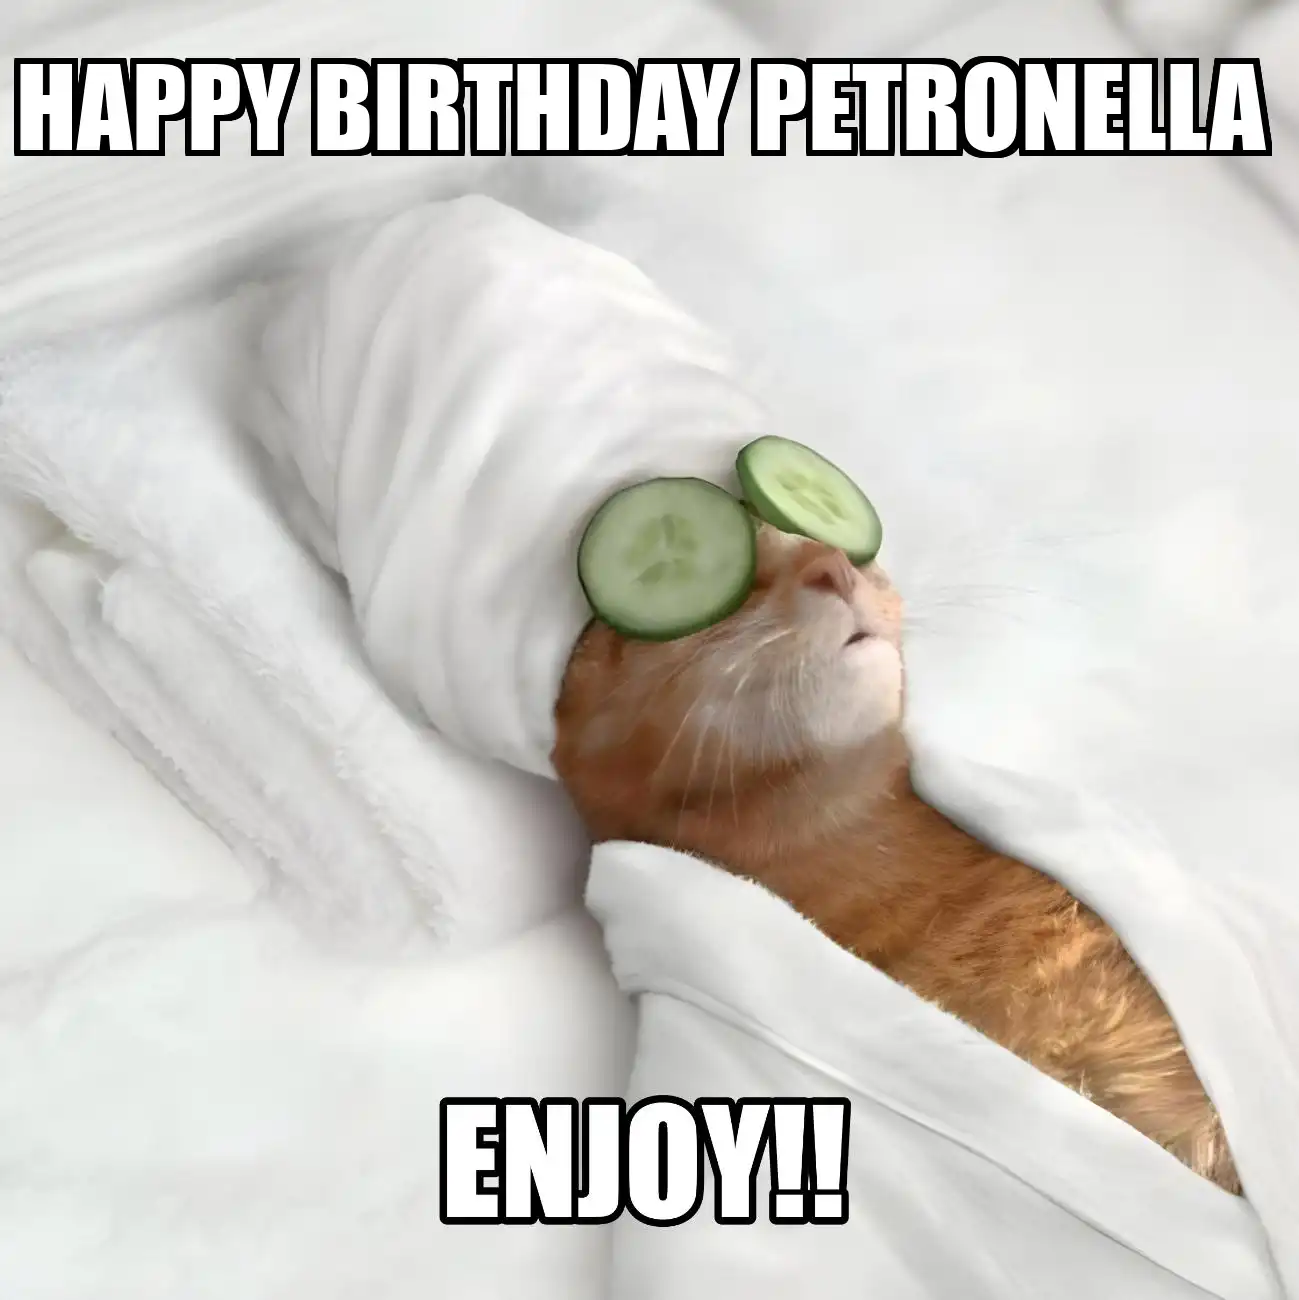 Happy Birthday Petronella Enjoy Cat Meme